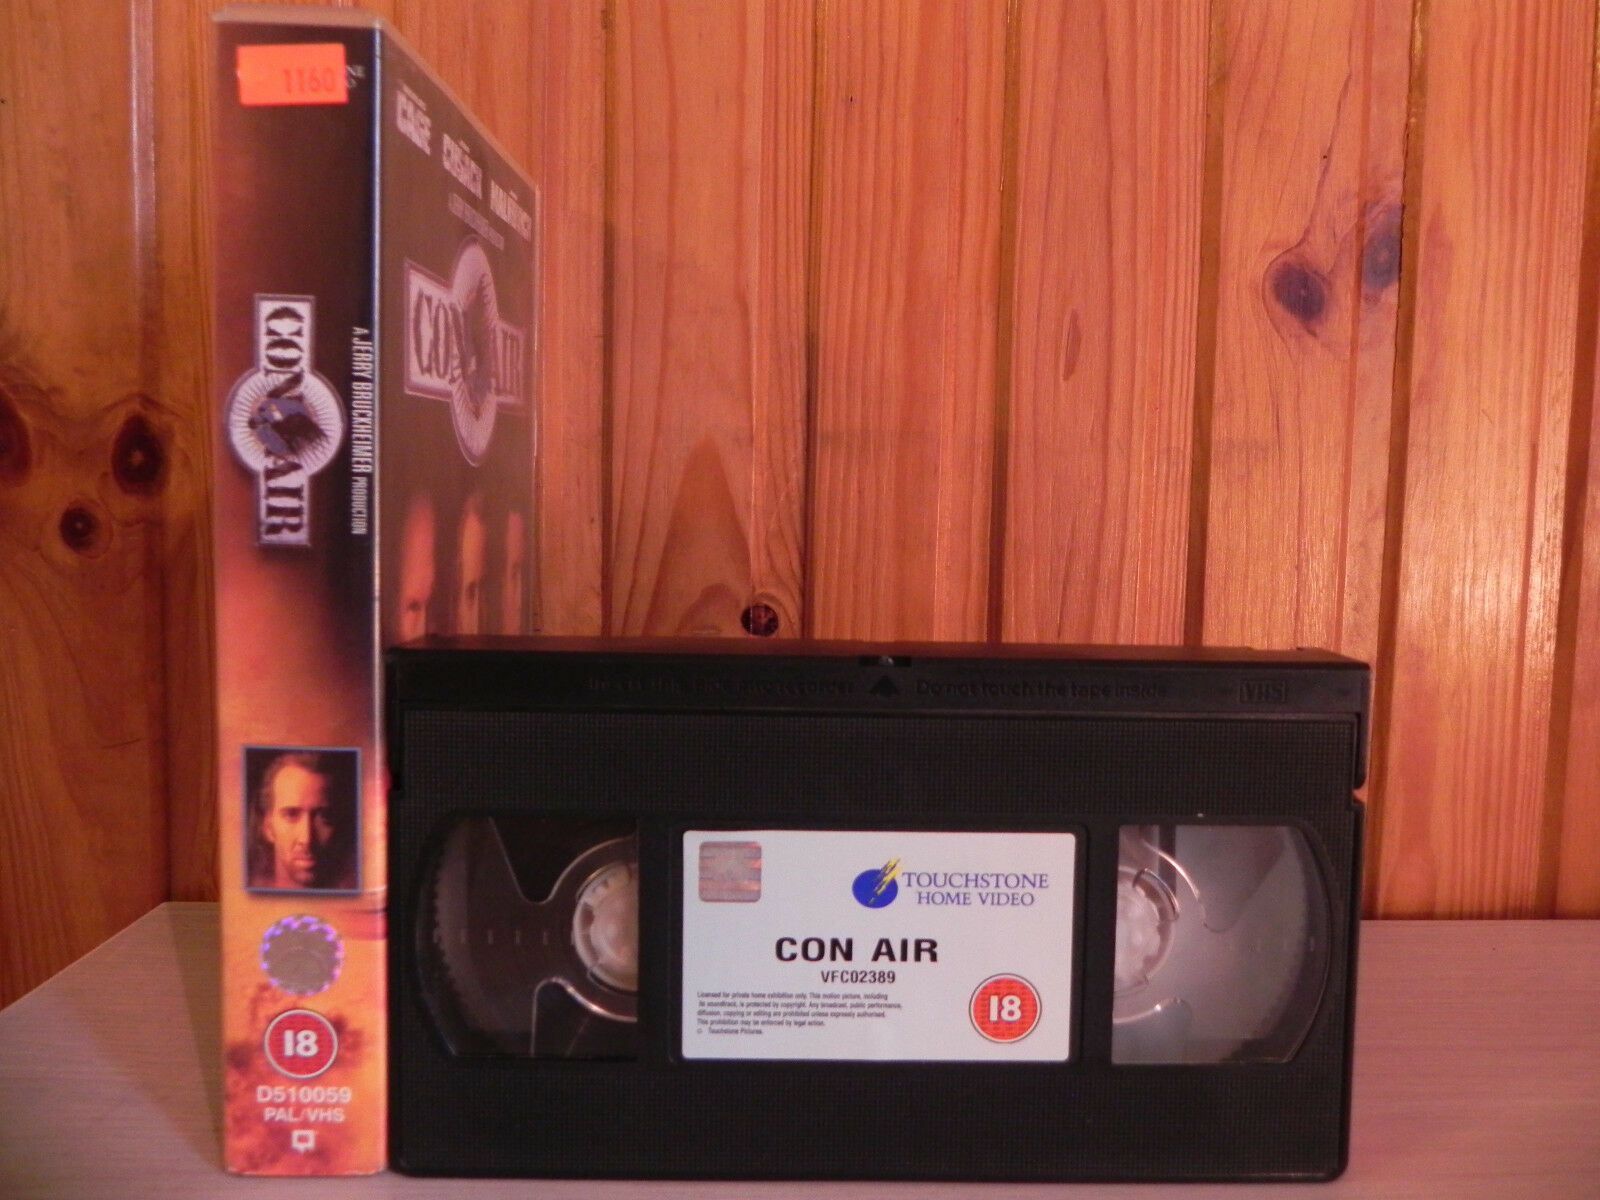 CON AIR - Cage / Cussack / Malkovich - Big Box Action - Ex-Rental Video - VHS-